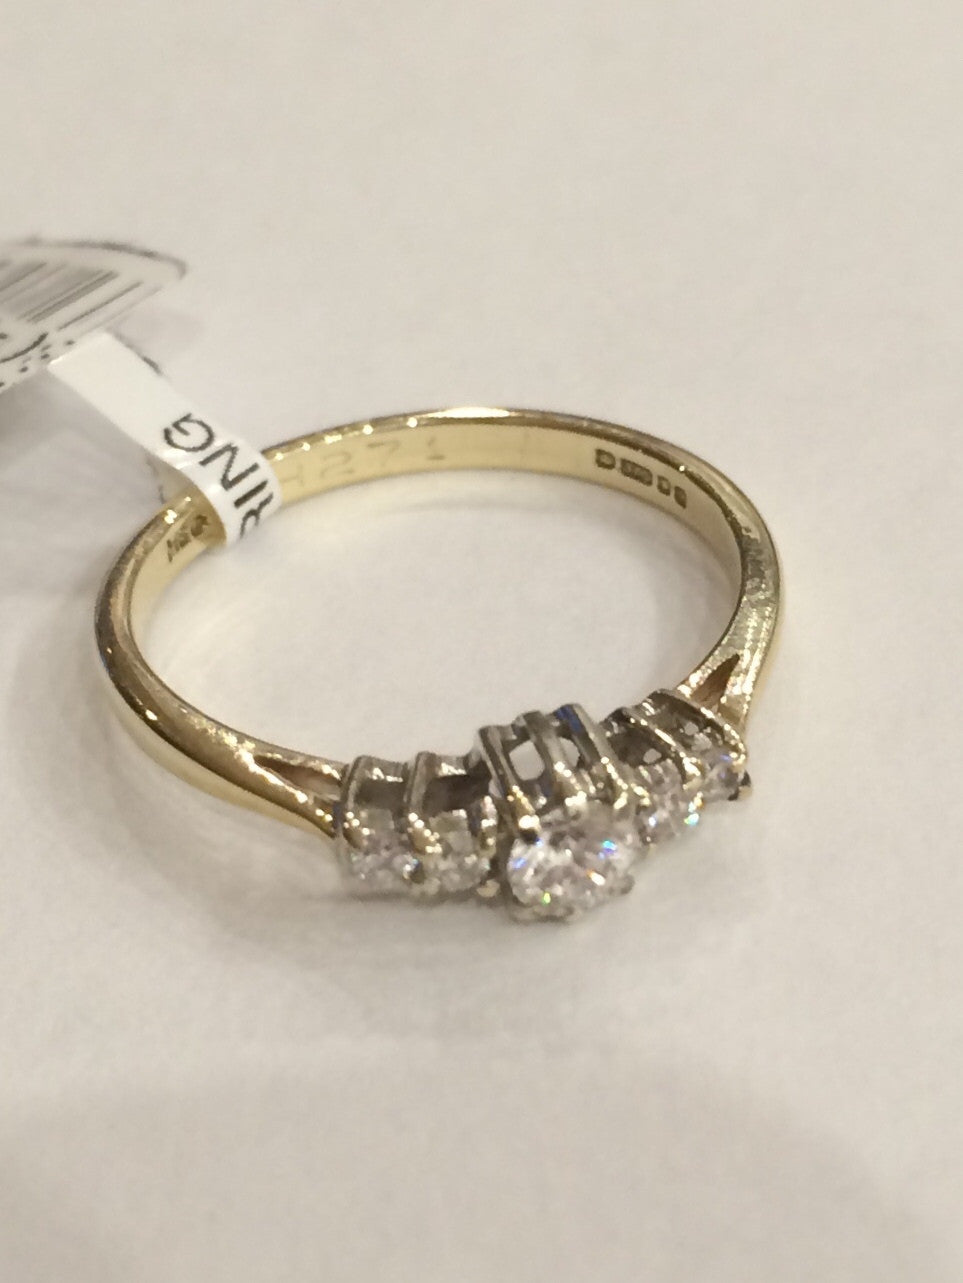 9CT YG 5 STONE 0.22cts DIAMOND RING ASQUITH - Robert Openshaw Fine Jewellery